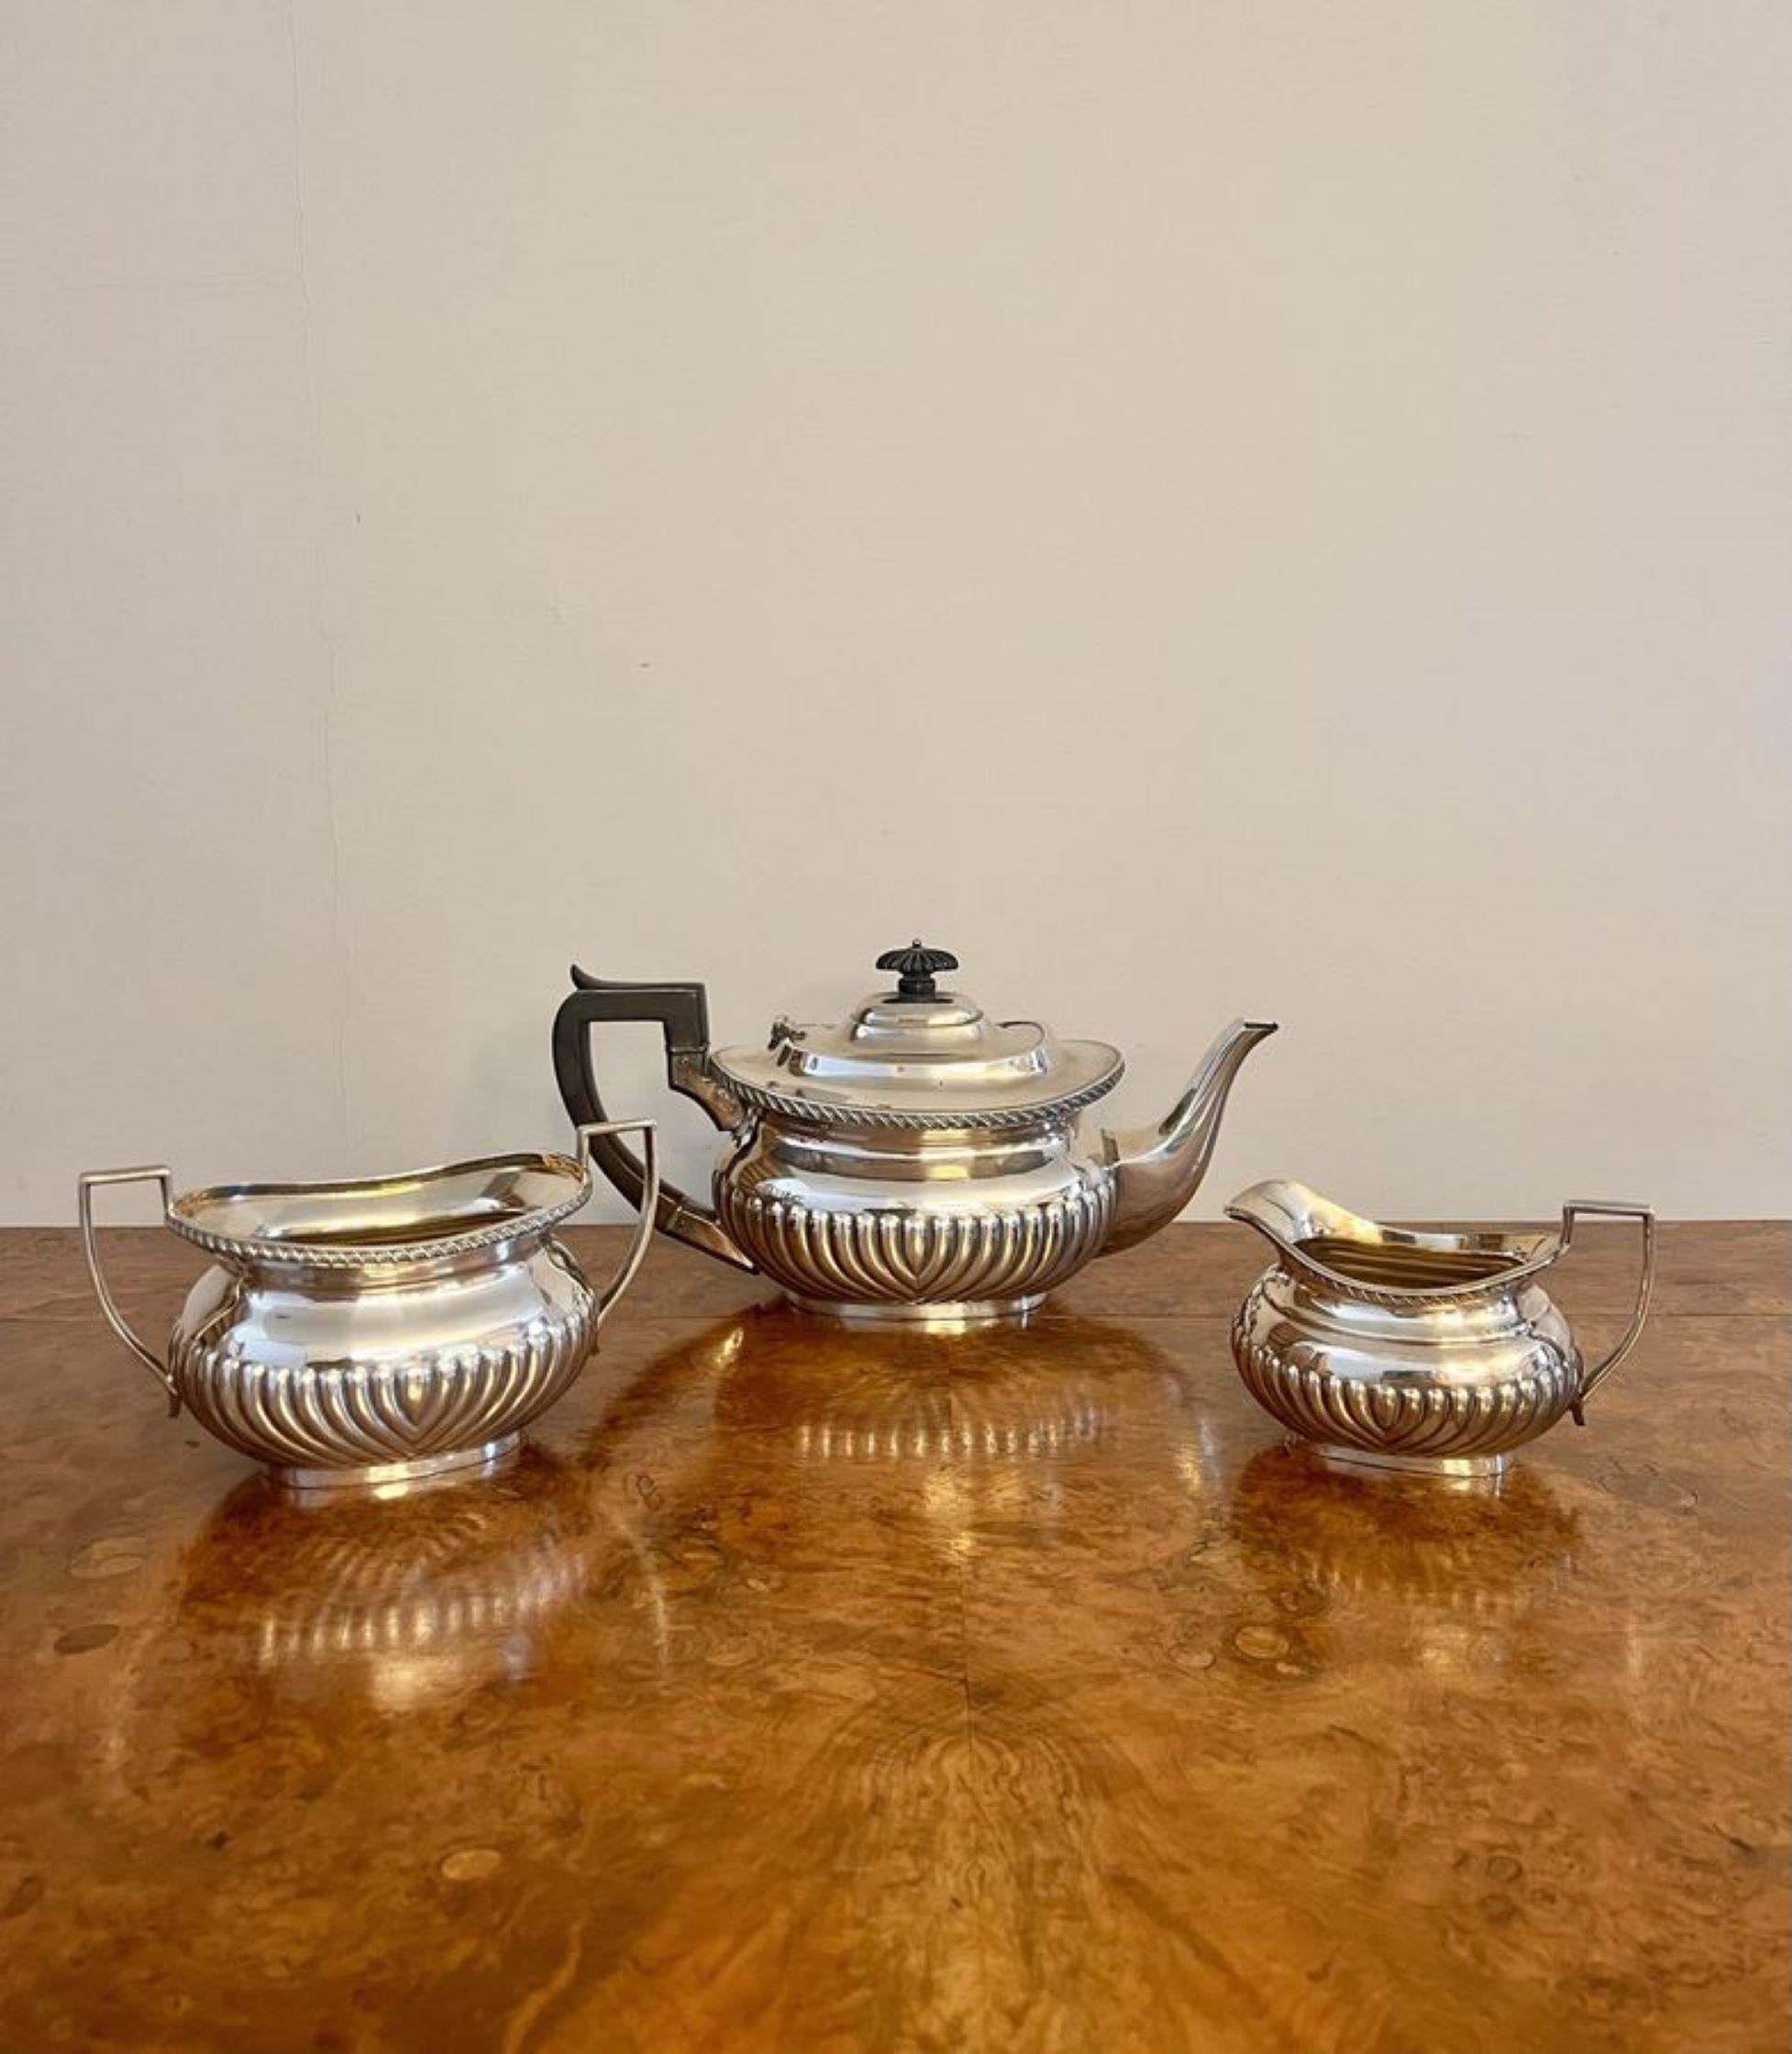 Wonderful quality antique Edwardian three piece tea set having a quality antique Edwardian silver plated three piece tea set consisting of a tea pot, sugar bowl and milk jug. 

D. 1900